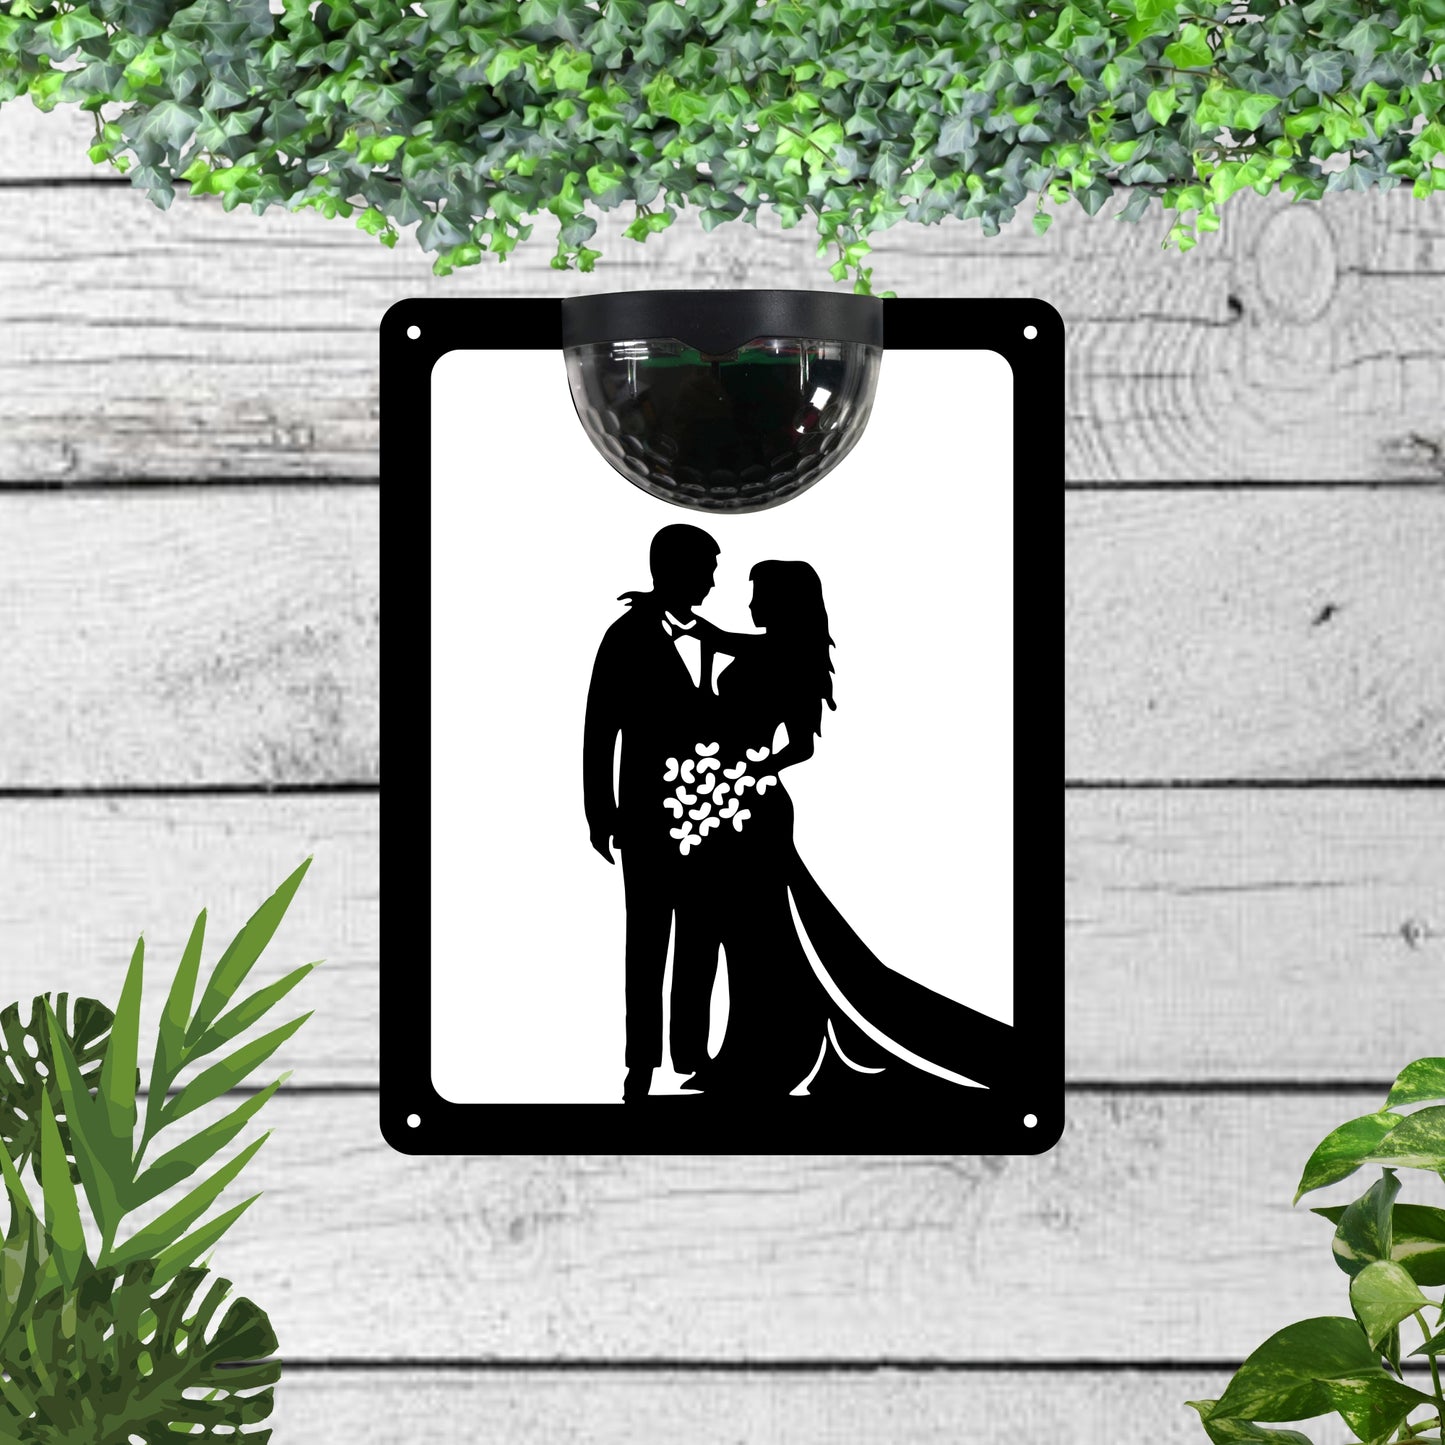 Garden Solar Light Wall Plaque featuring a bride and groom | John Alans